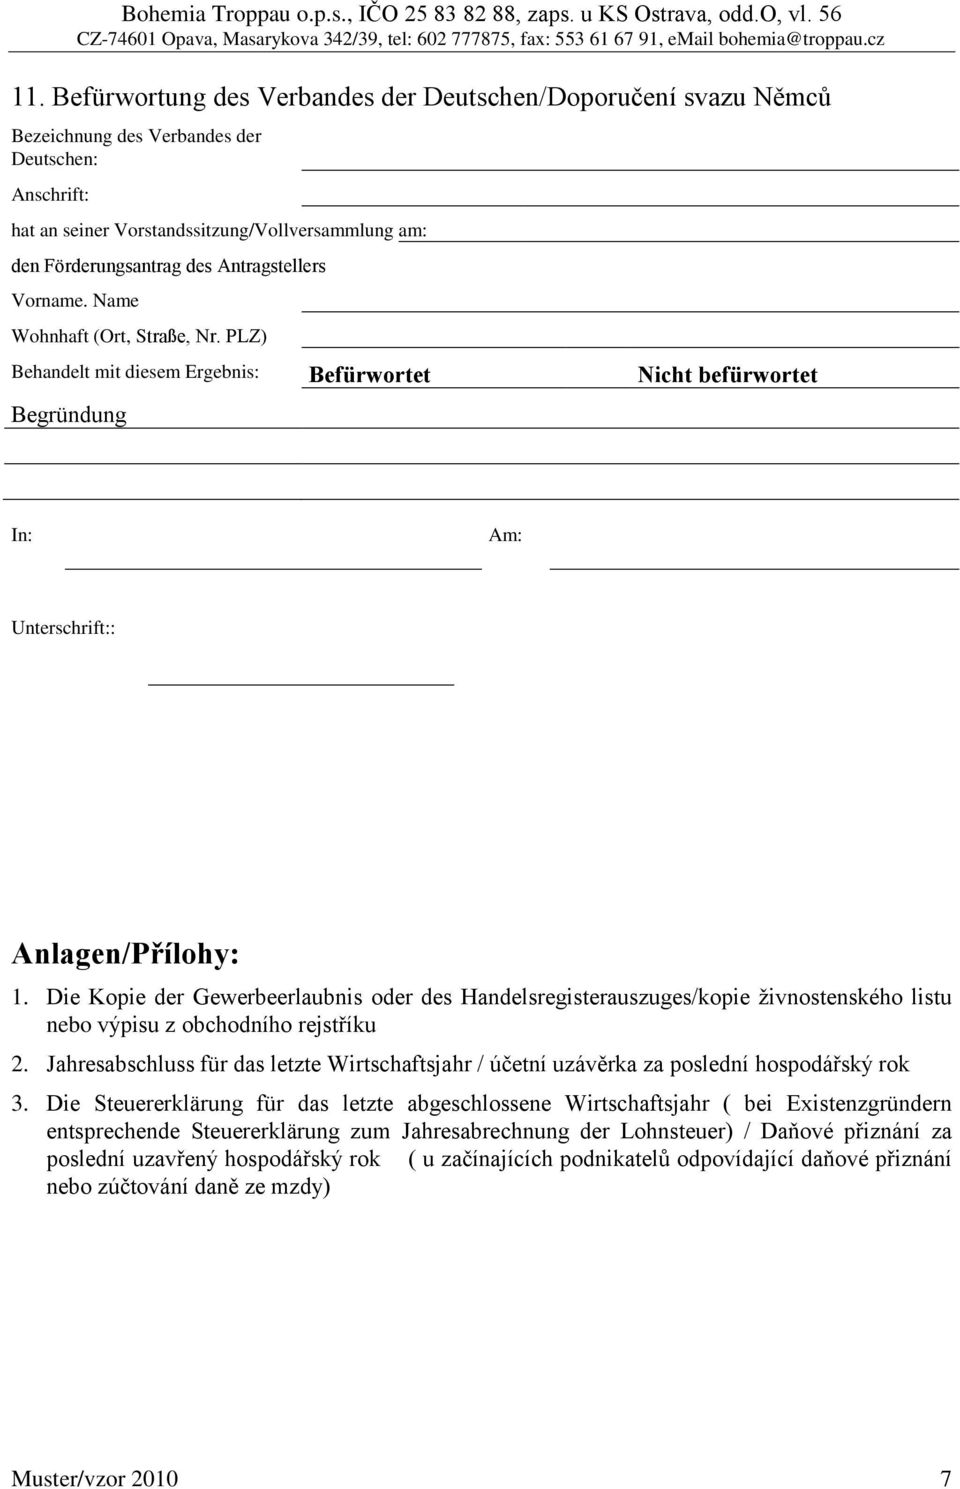 Die Kopie der Gewerbeerlaubnis oder des Handelsregisterauszuges/kopie ţivnostenského listu nebo výpisu z obchodního rejstříku 2.